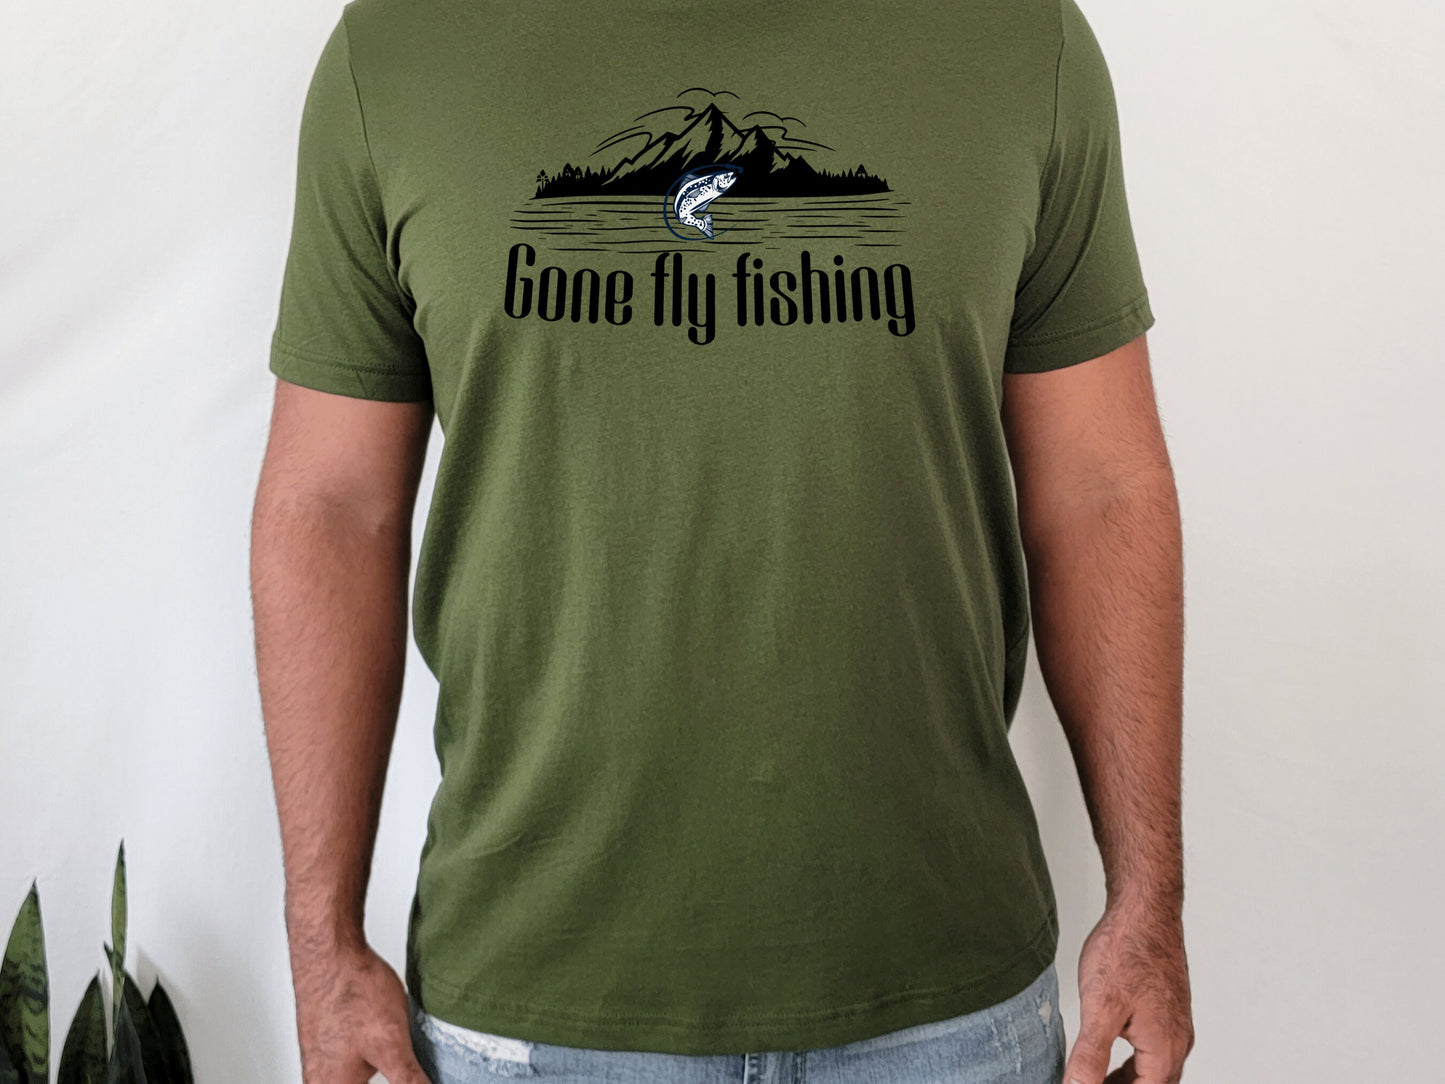 Fly Fishing Shirt, Fly Fishing Gifts for Men, Fly Fishing T-Shirt, Fishing T-Shirt, Gone Fly Fishing, Angler Shirt